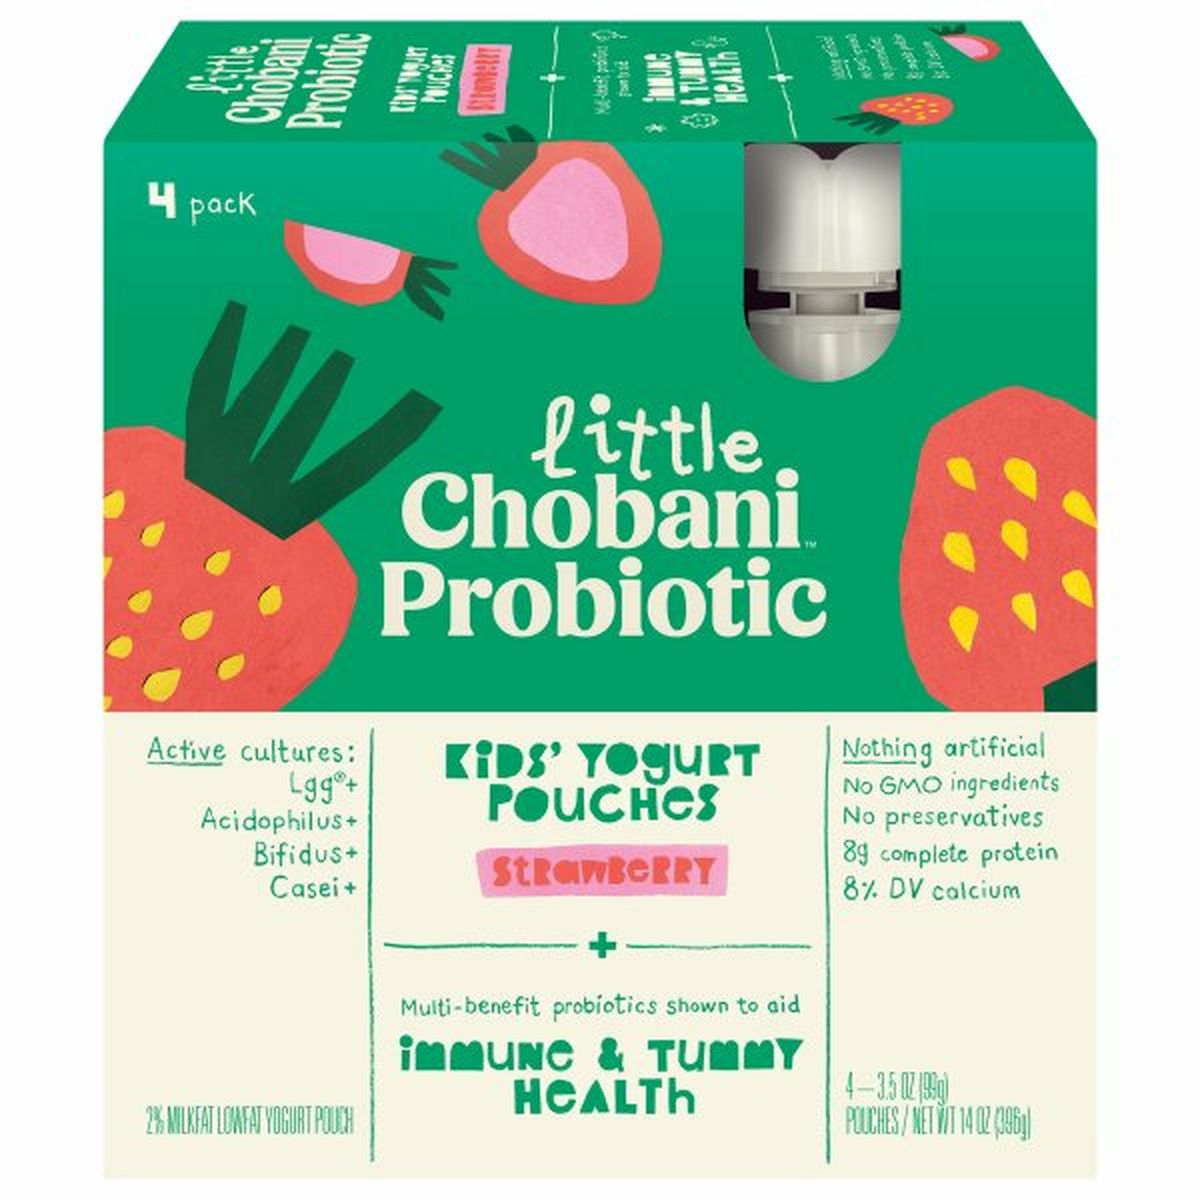 Calories in Little Chobani Probiotic Yogurt Pouches, Lowfat, Strawberry, Kids', 4 Pack